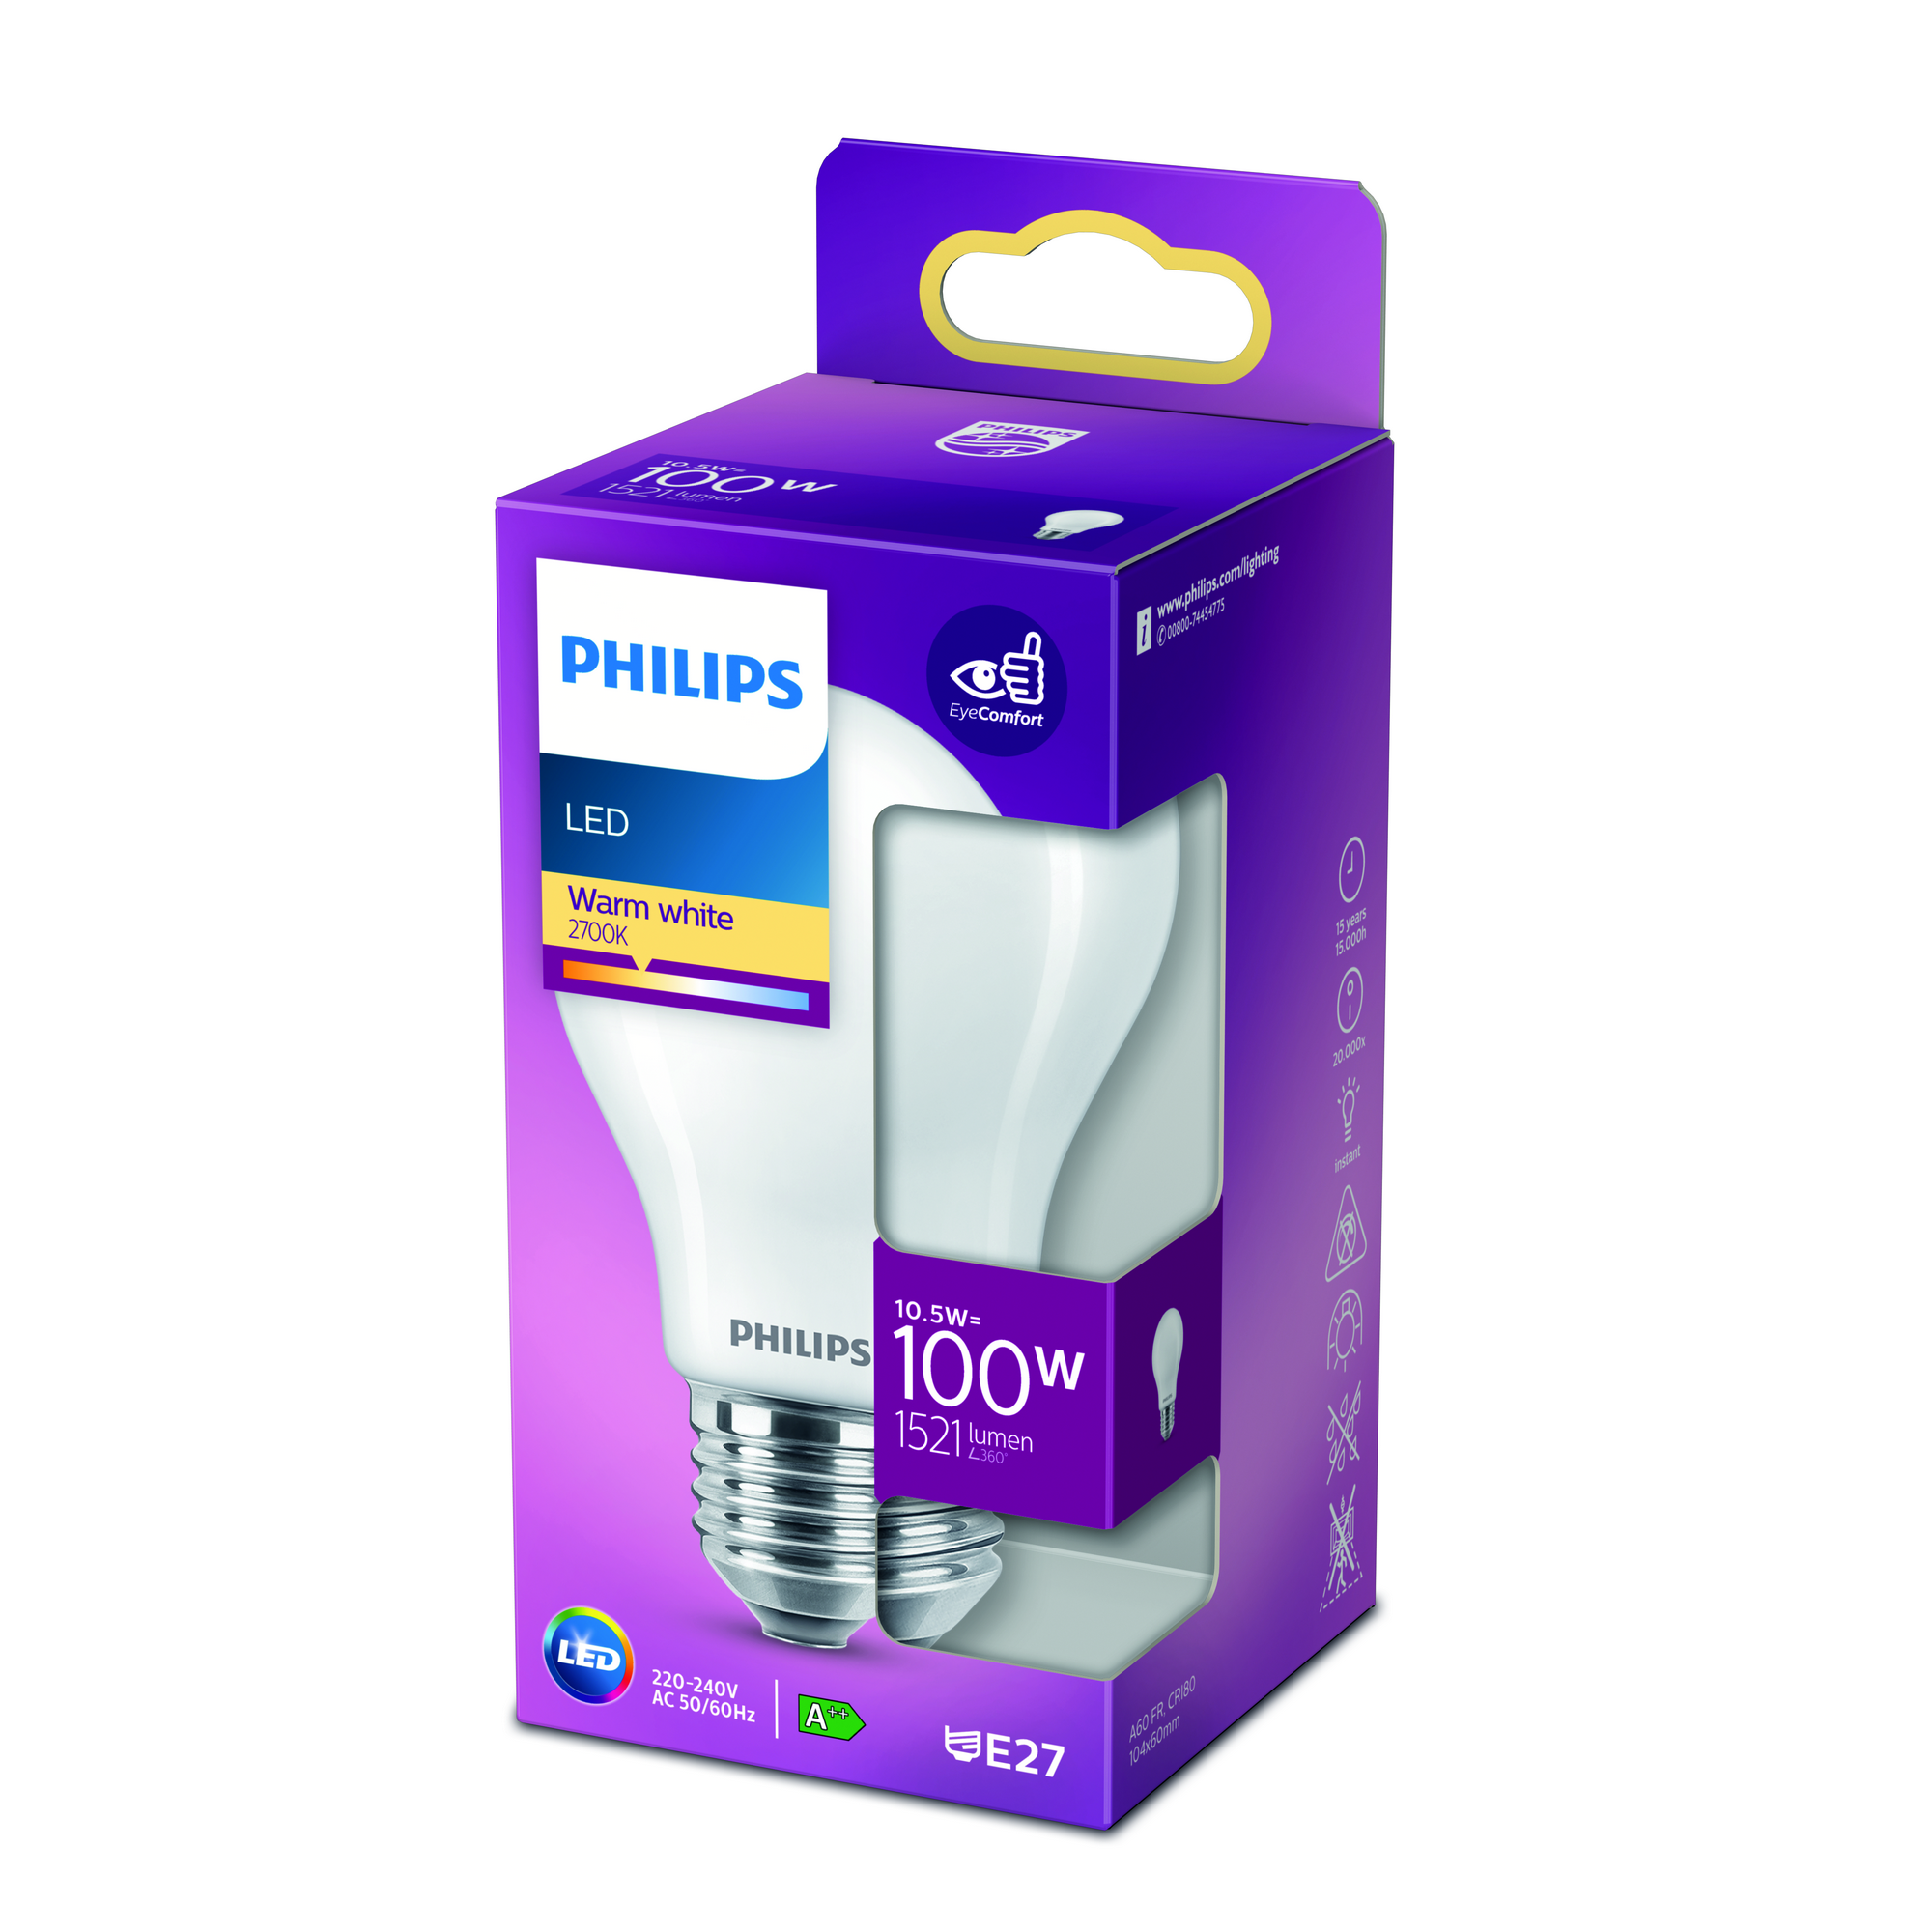 LED Lampe 10,5 W E27 warmweiß 1521 Lumen matt + product picture